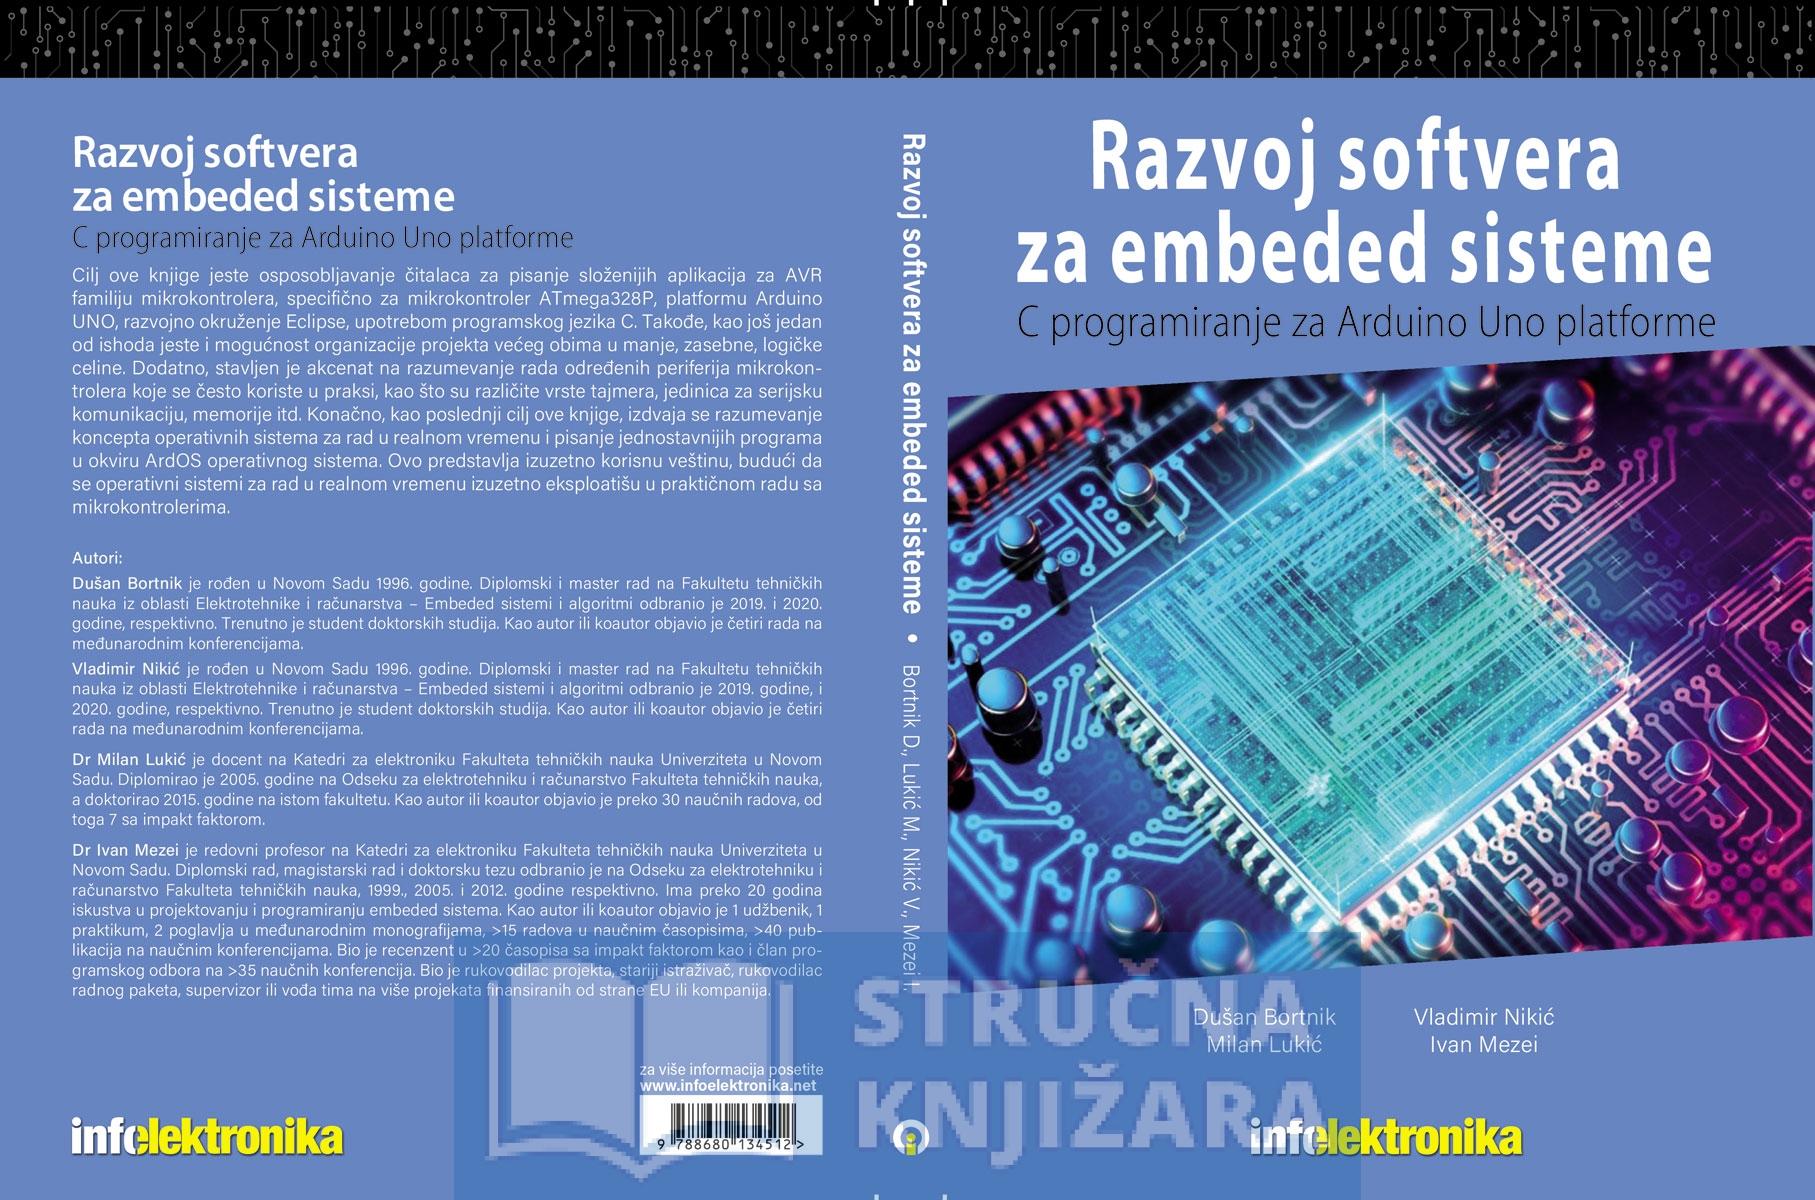 Razvoj softvera za embeded sisteme - Programiranje Arduino UNO platforme u jeziku C - Dušan Bortnik, Milan Lukić, Vladimir Nikić, Ivan Mezei